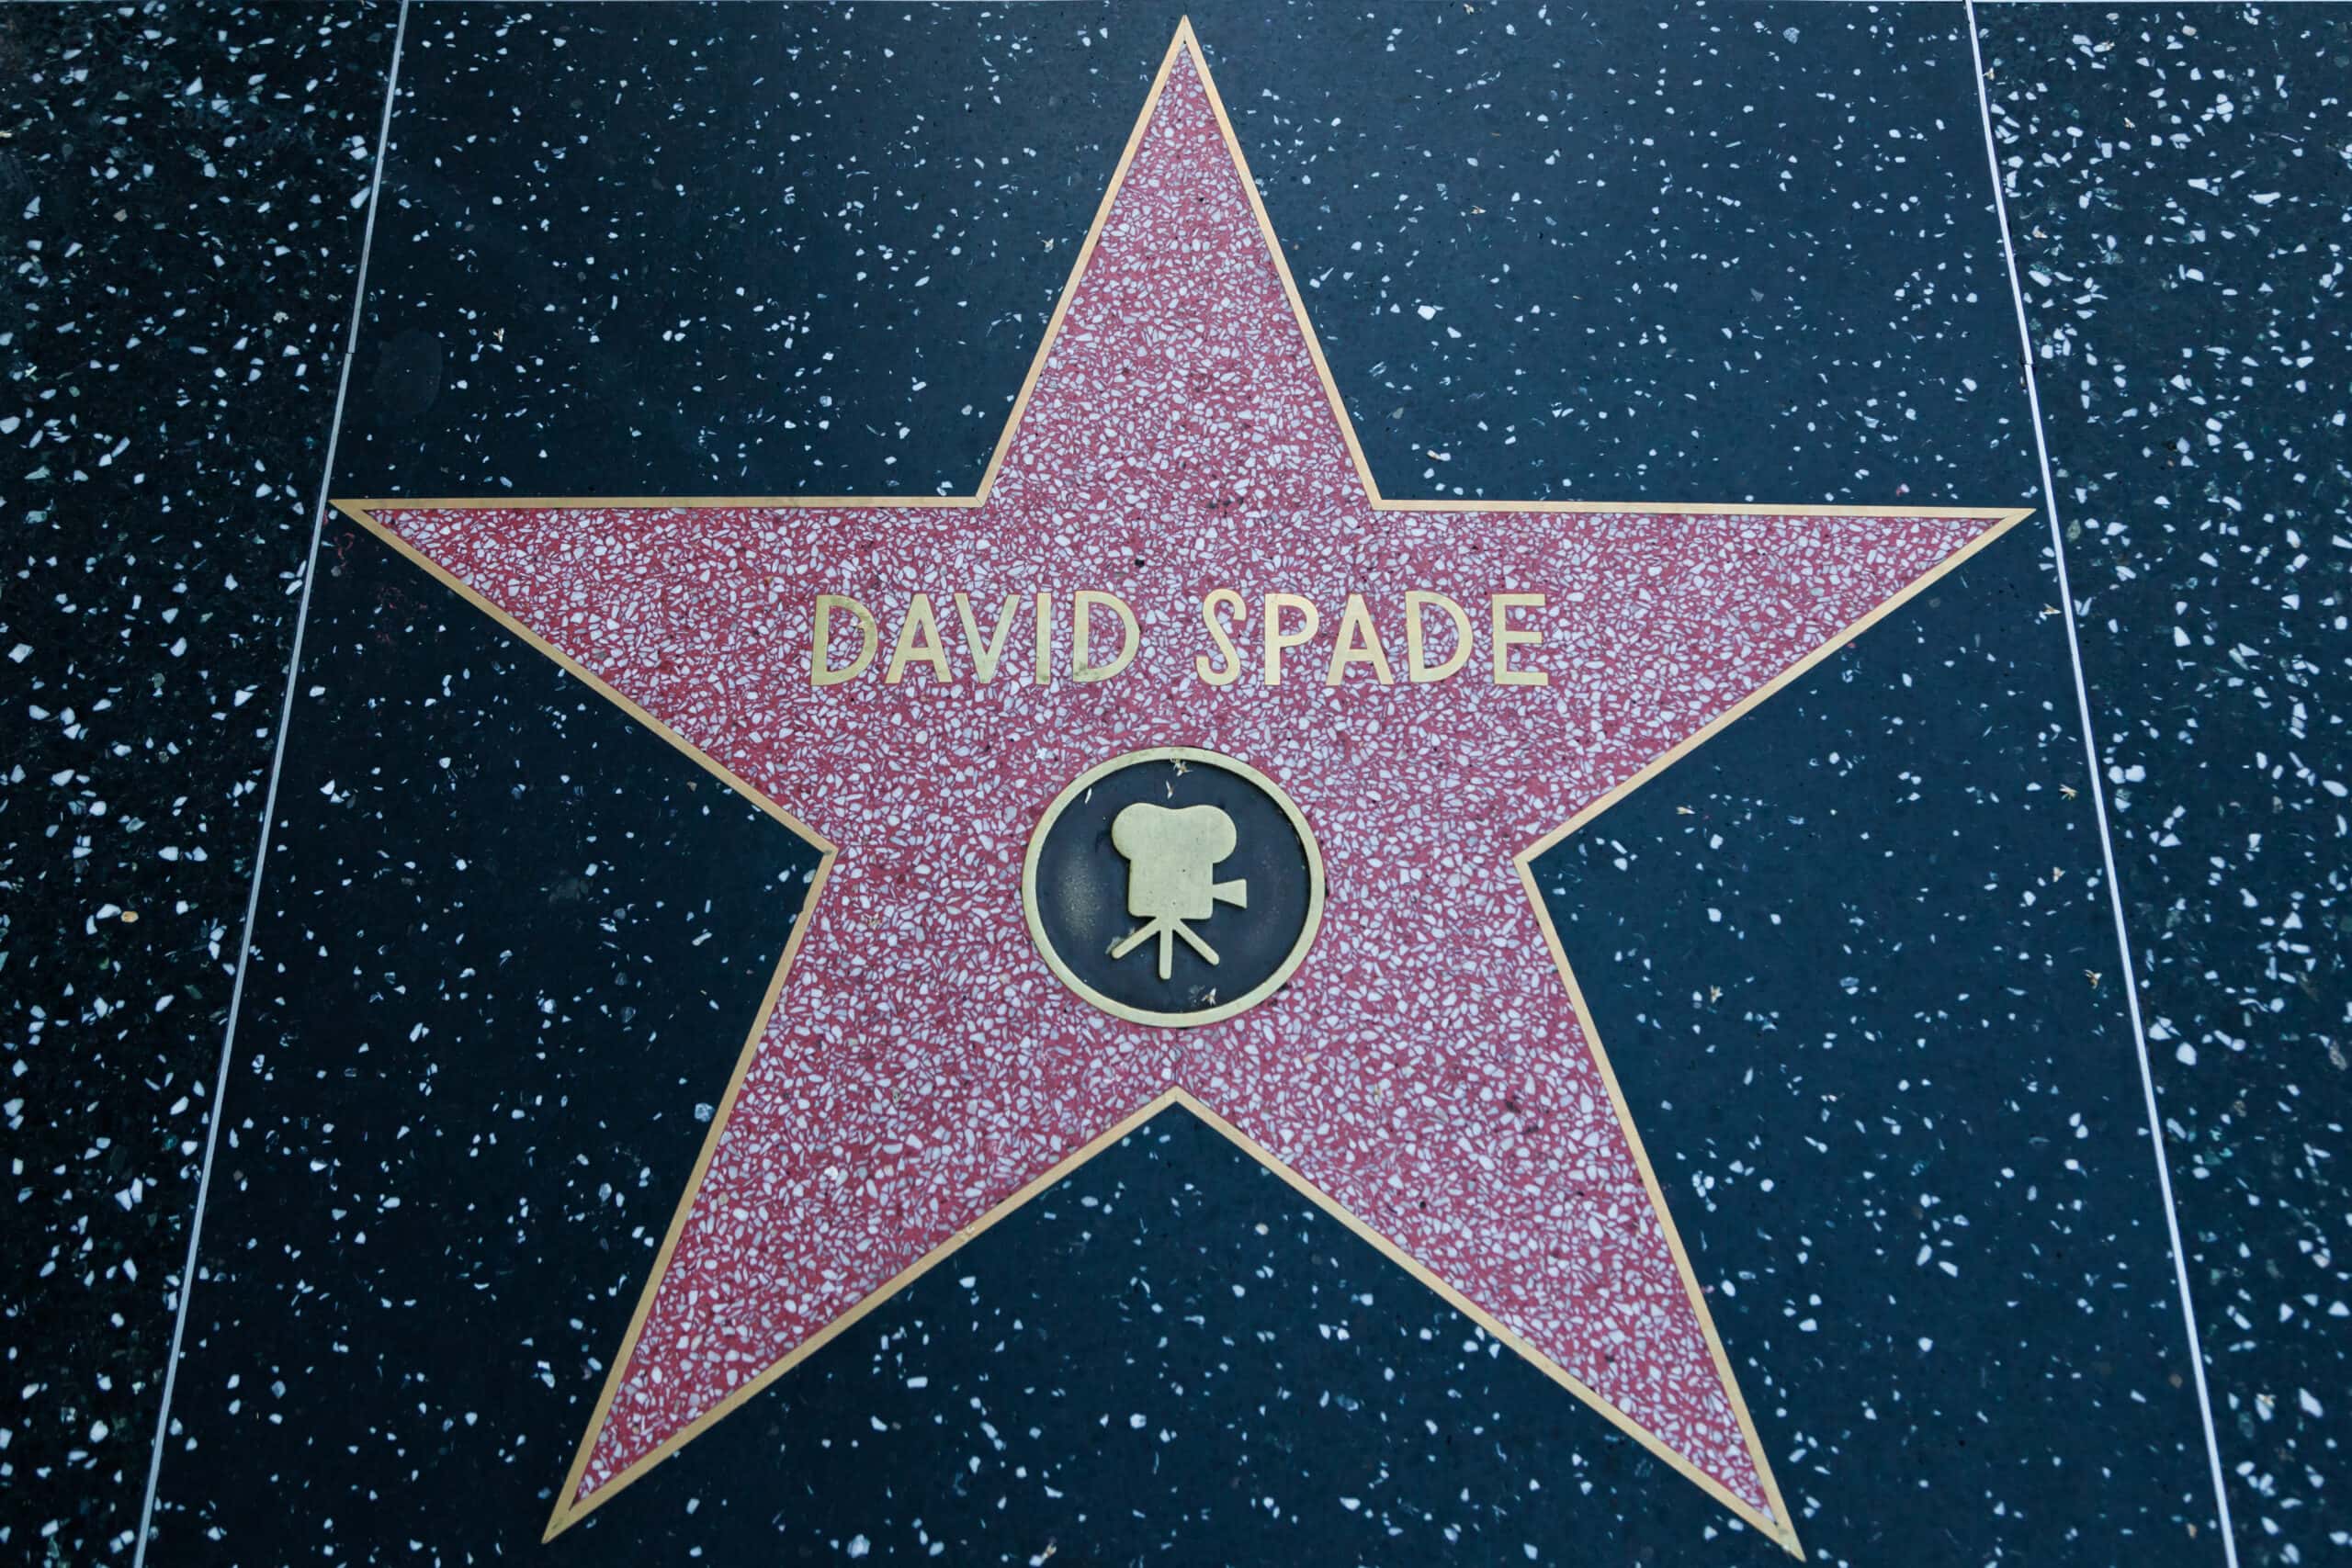 David Spade Facts